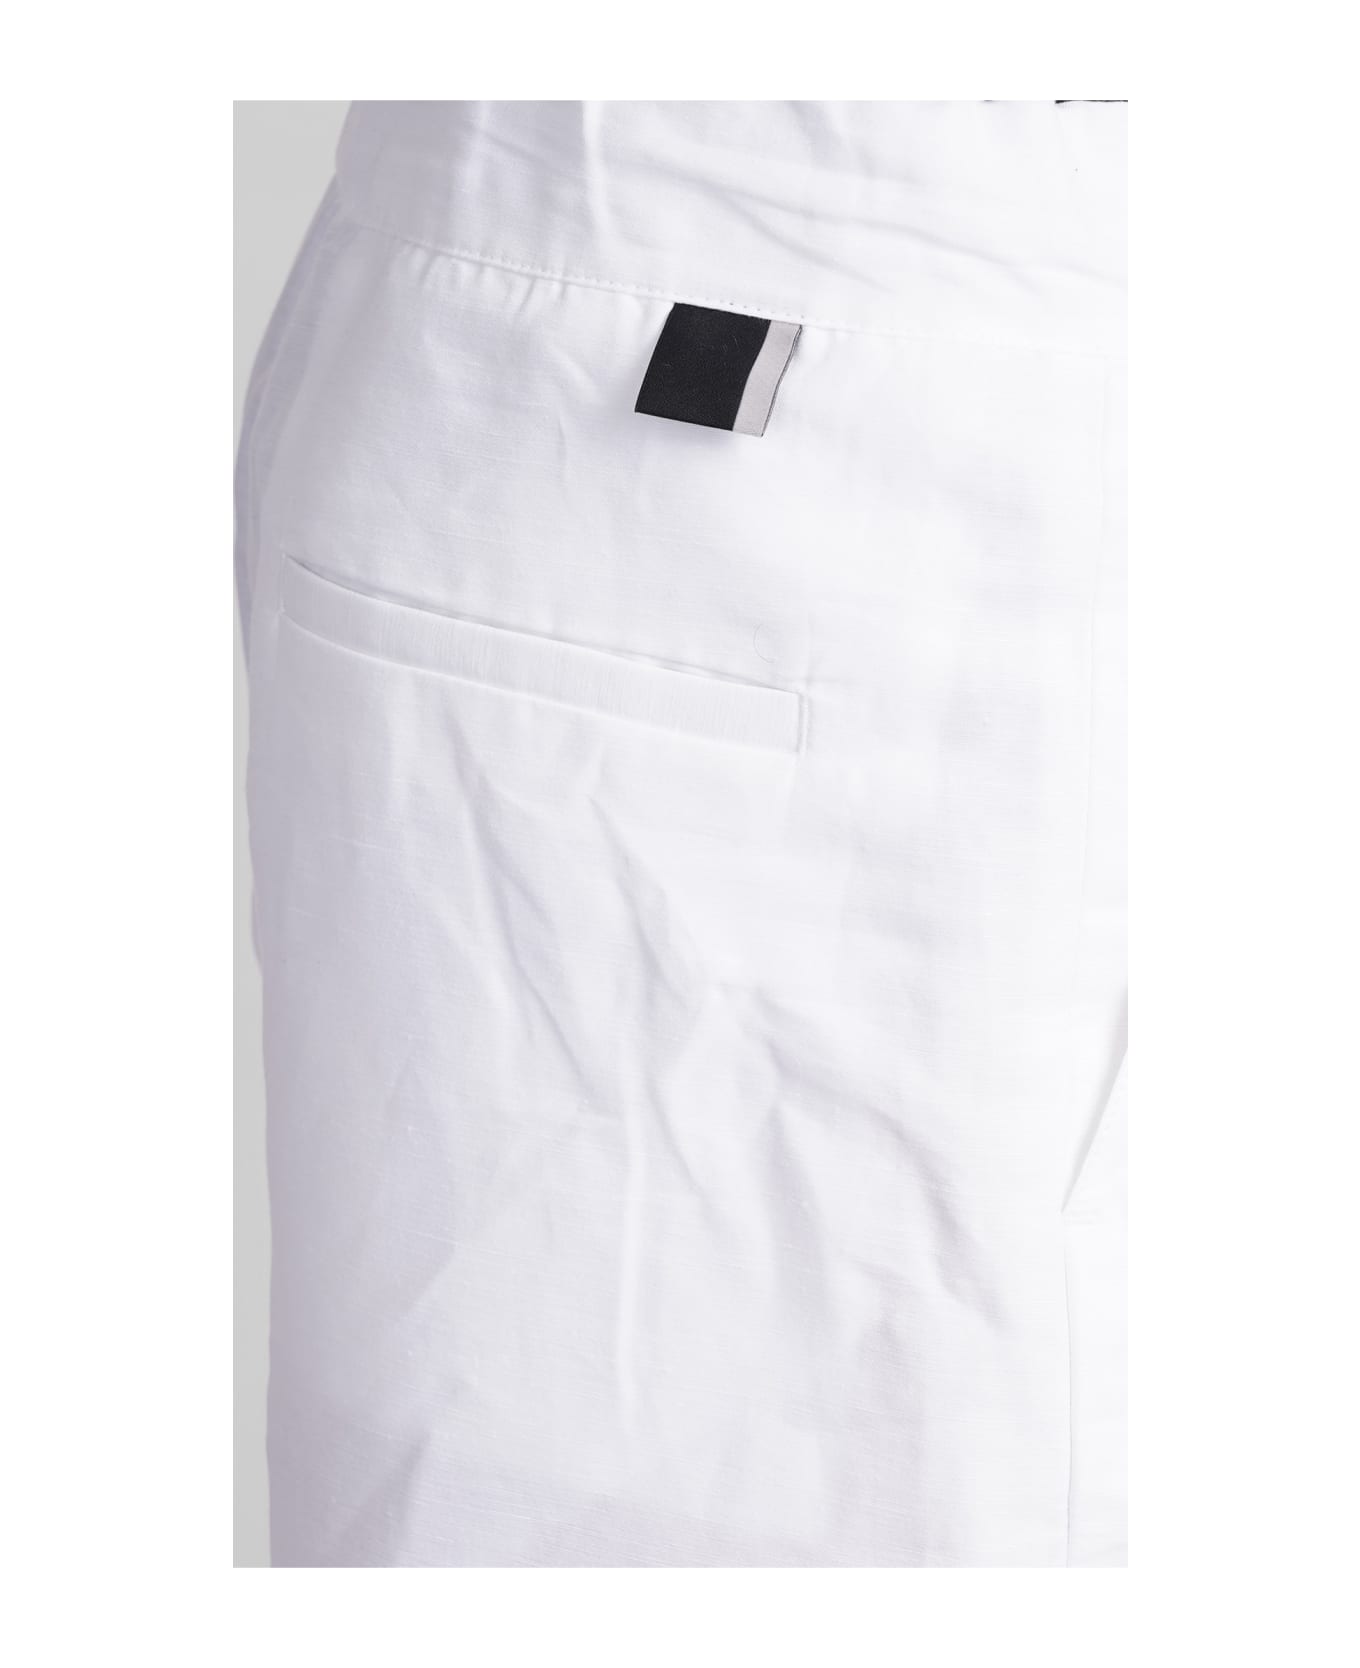 Low Brand Tokyo Shorts In White Linen - white